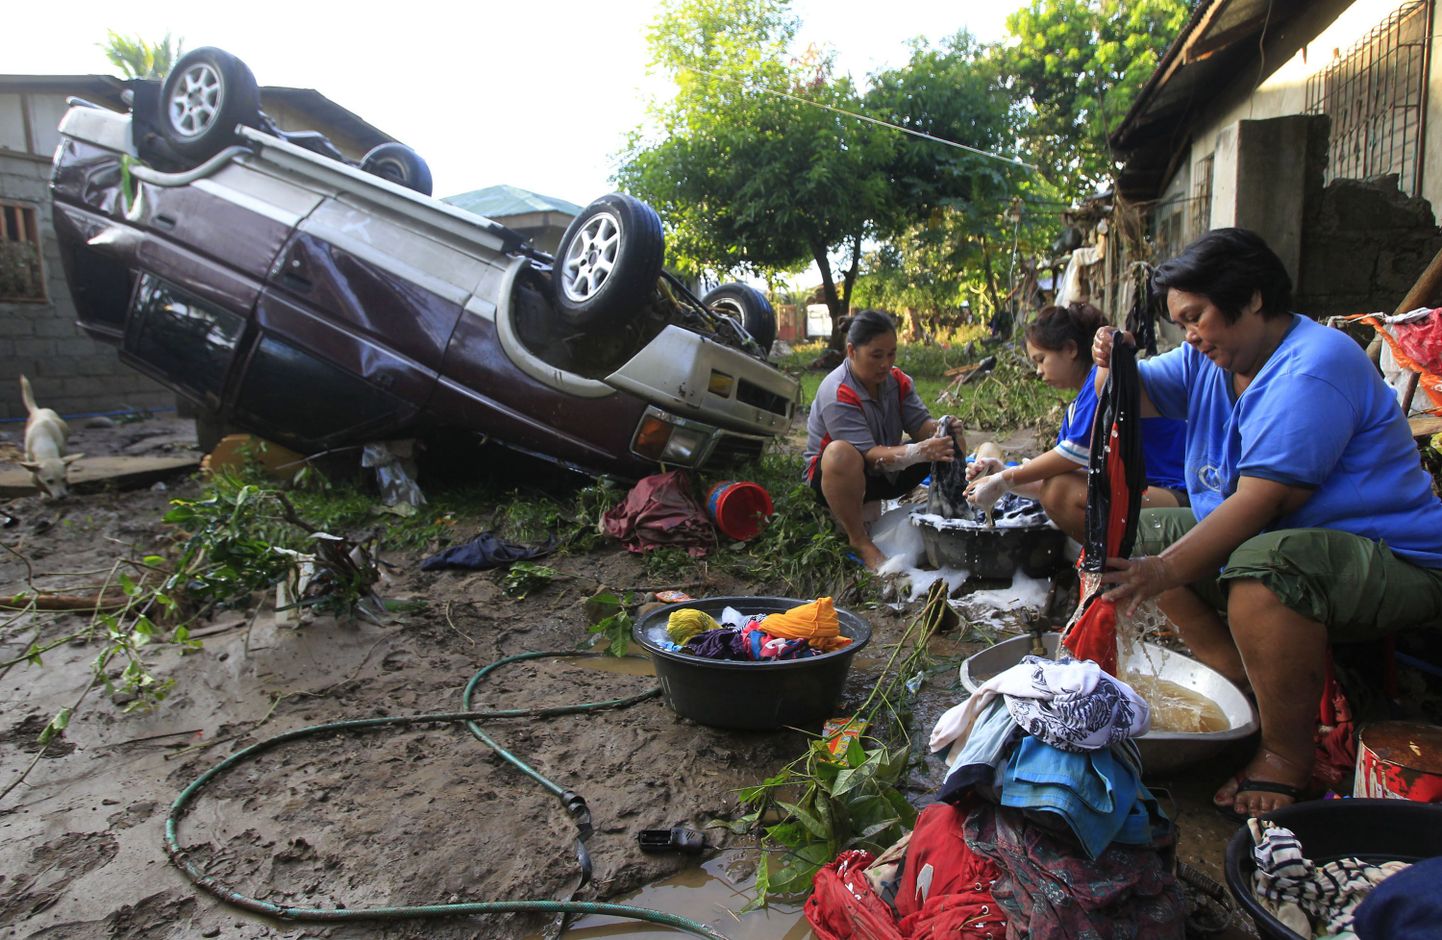 Cagayan de Oro elanikud pesemas pesu, kõrval taifuun Washi tõttu kummuli paiskunud auto.